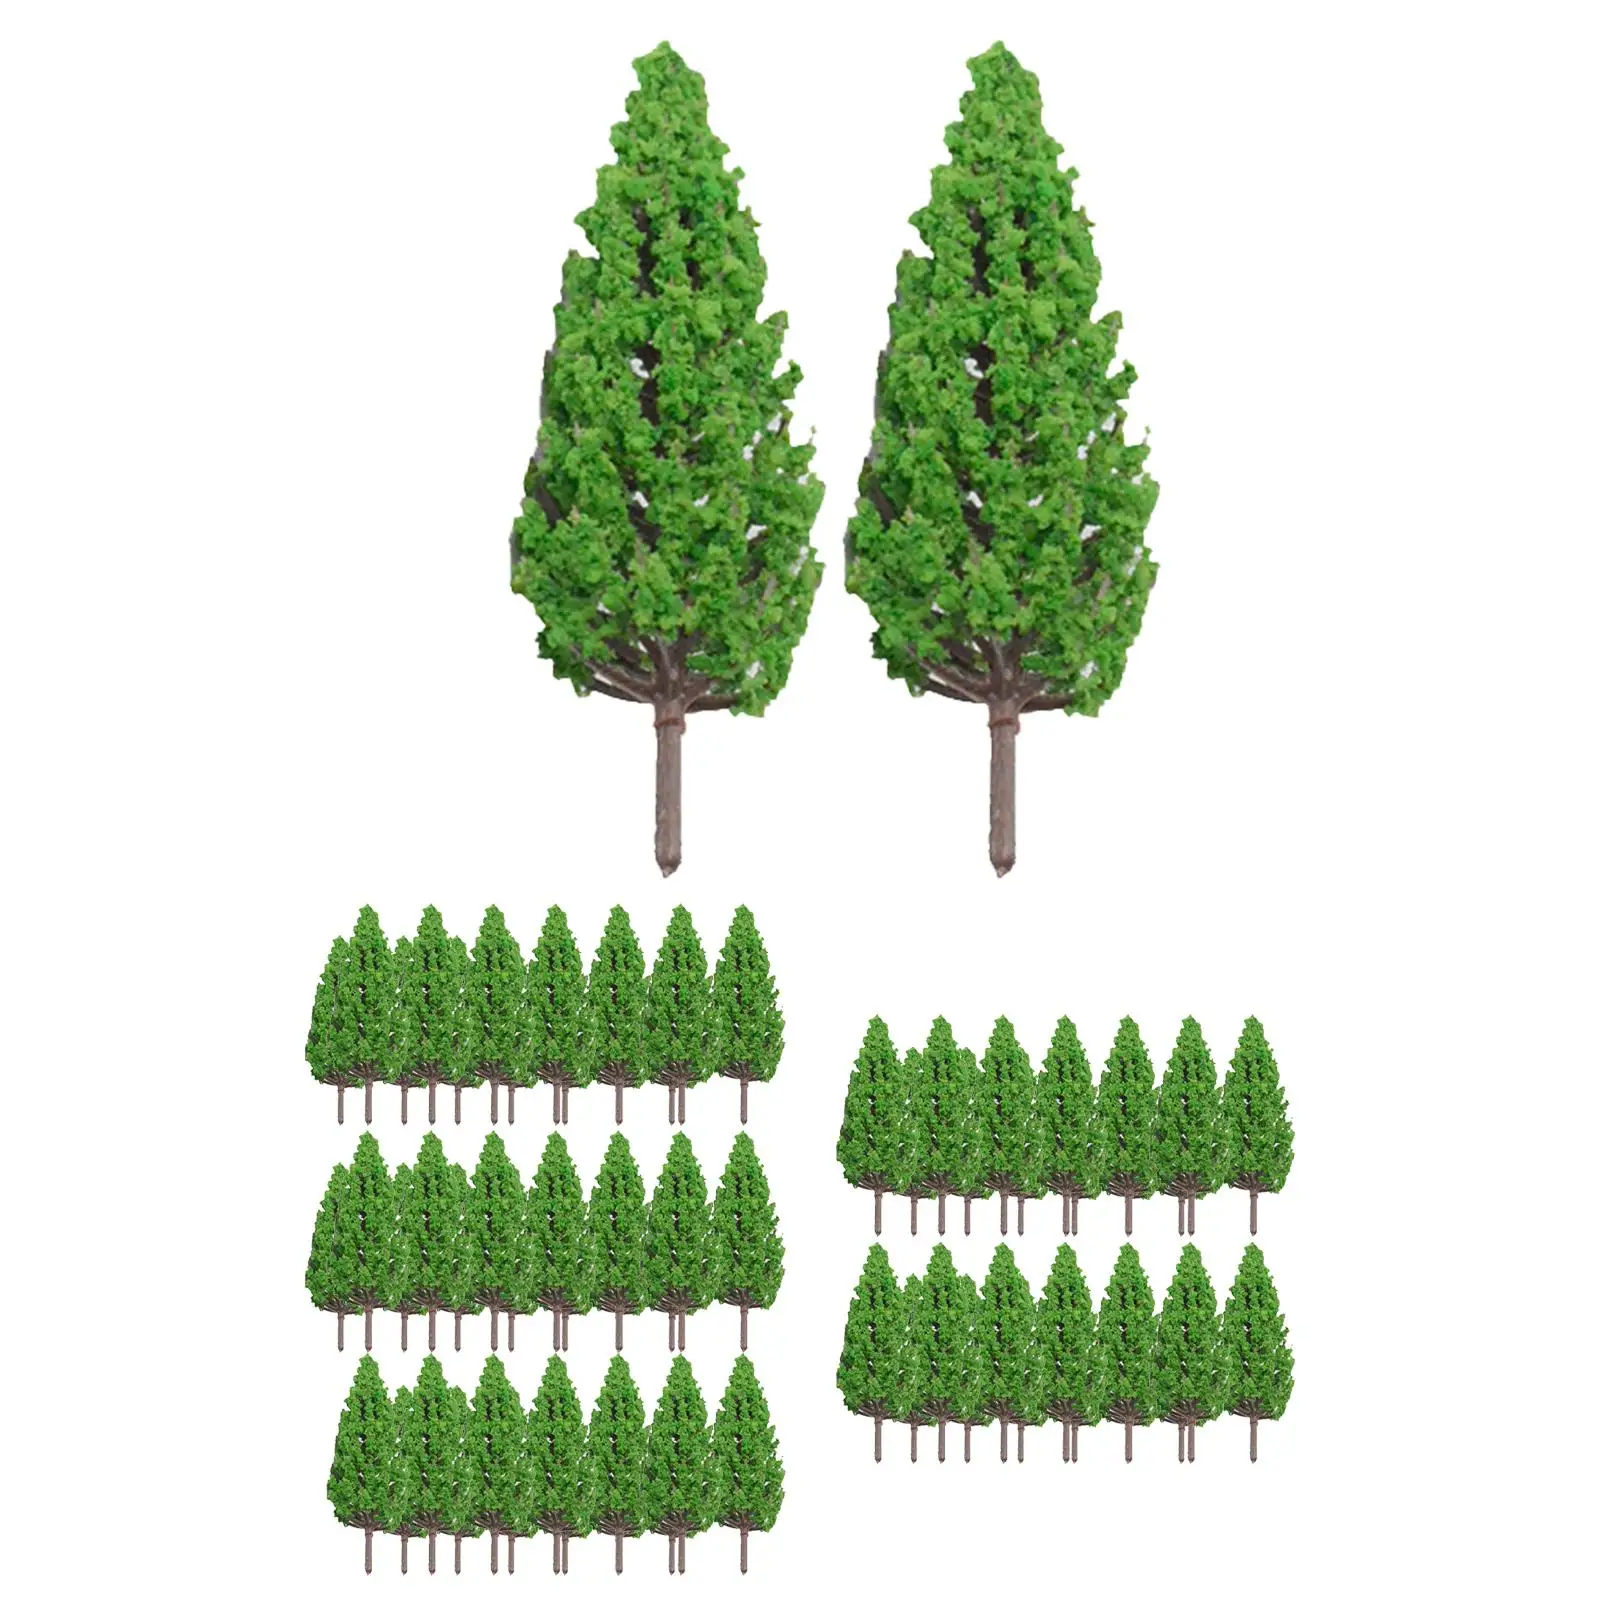 70x Mini Landscape Tree Model Trees for DIY Crafts Railroad Scenery Building Model Diorama Layout Miniature Scenery